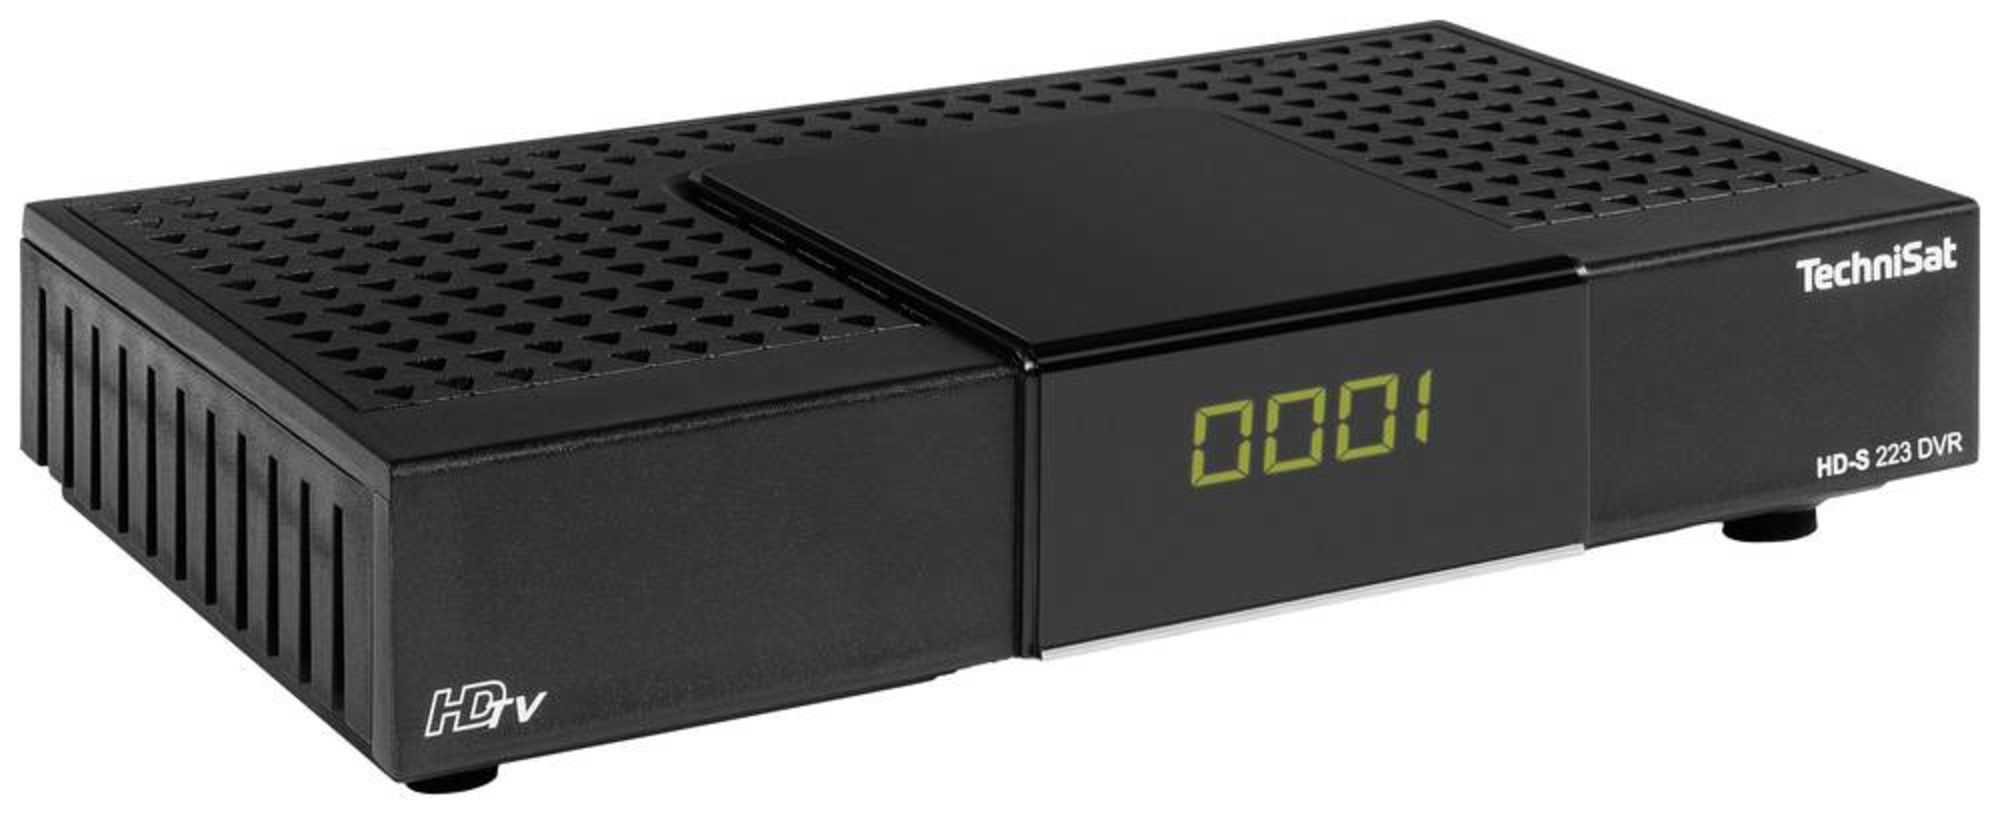 TechniSat HD-S 223 DVR HD-SAT-Receiver online bestellen